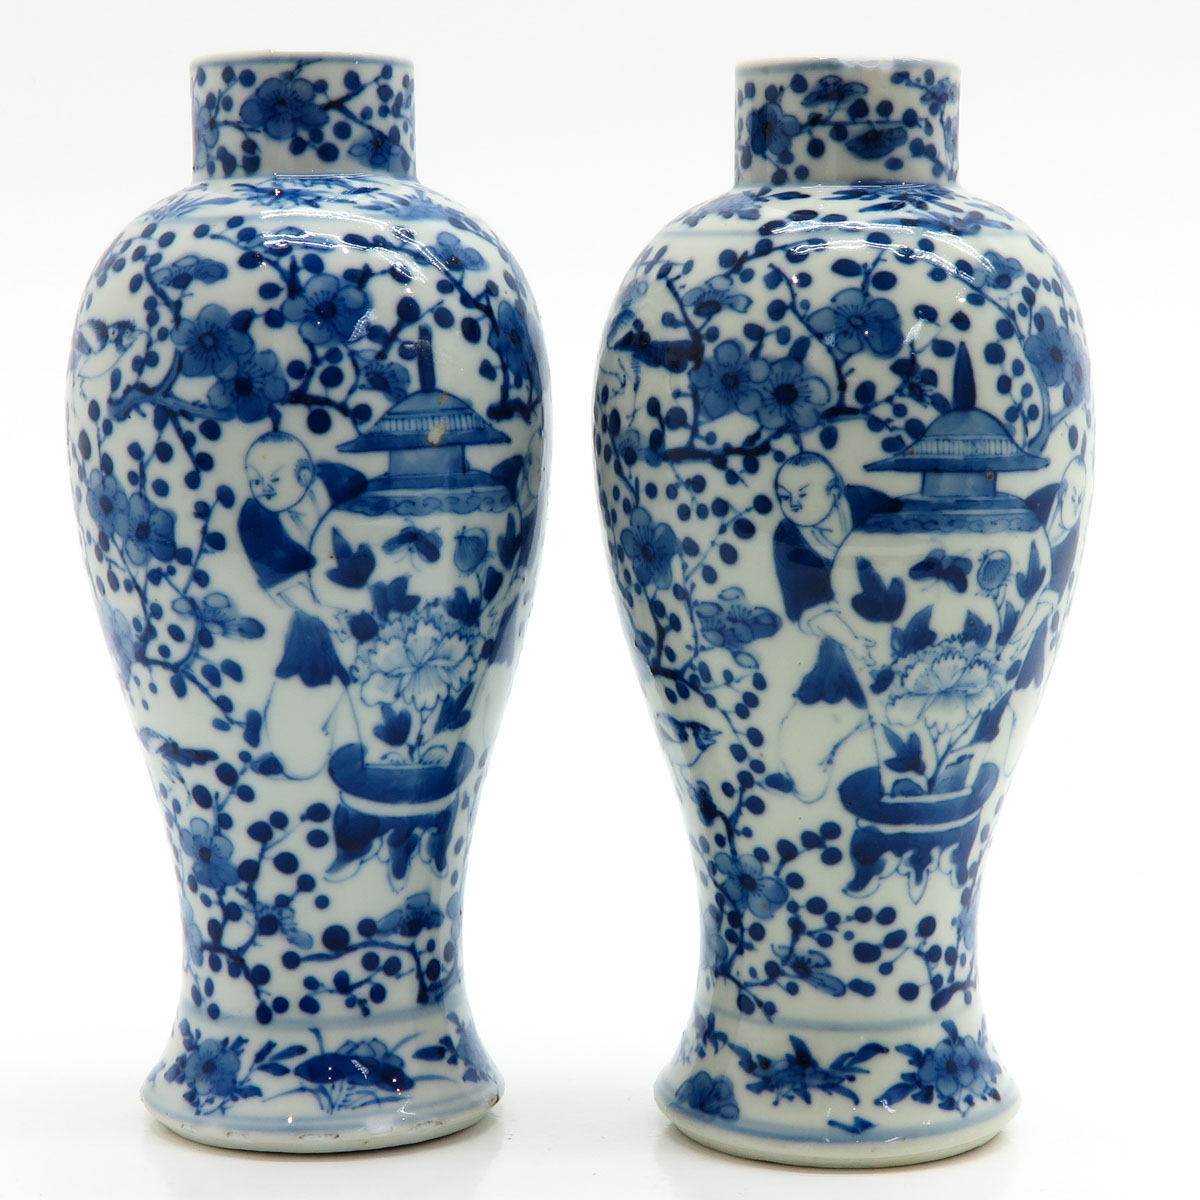 Lot of 2 China Porcelain Vases - Image 3 of 6